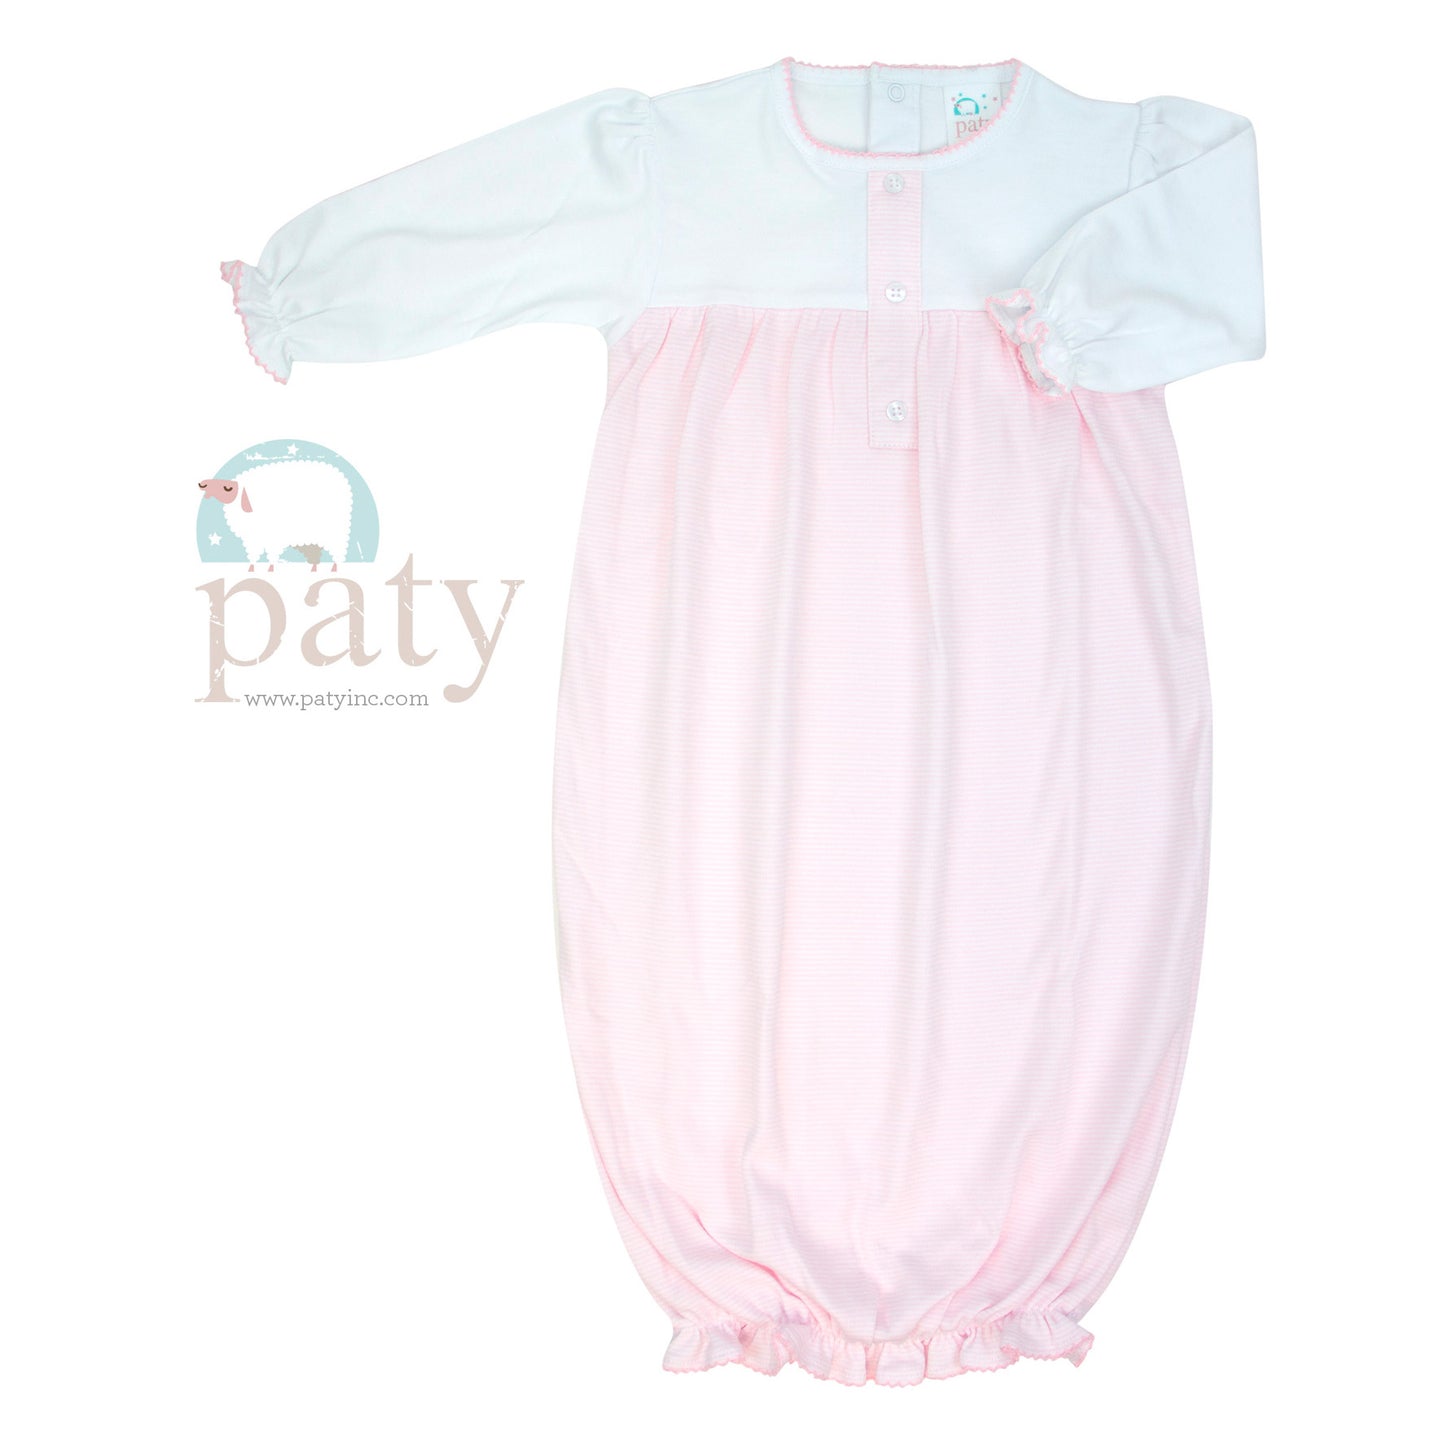 Paty Inc Sweet Stripes Pima Gown Pink/White Newborn